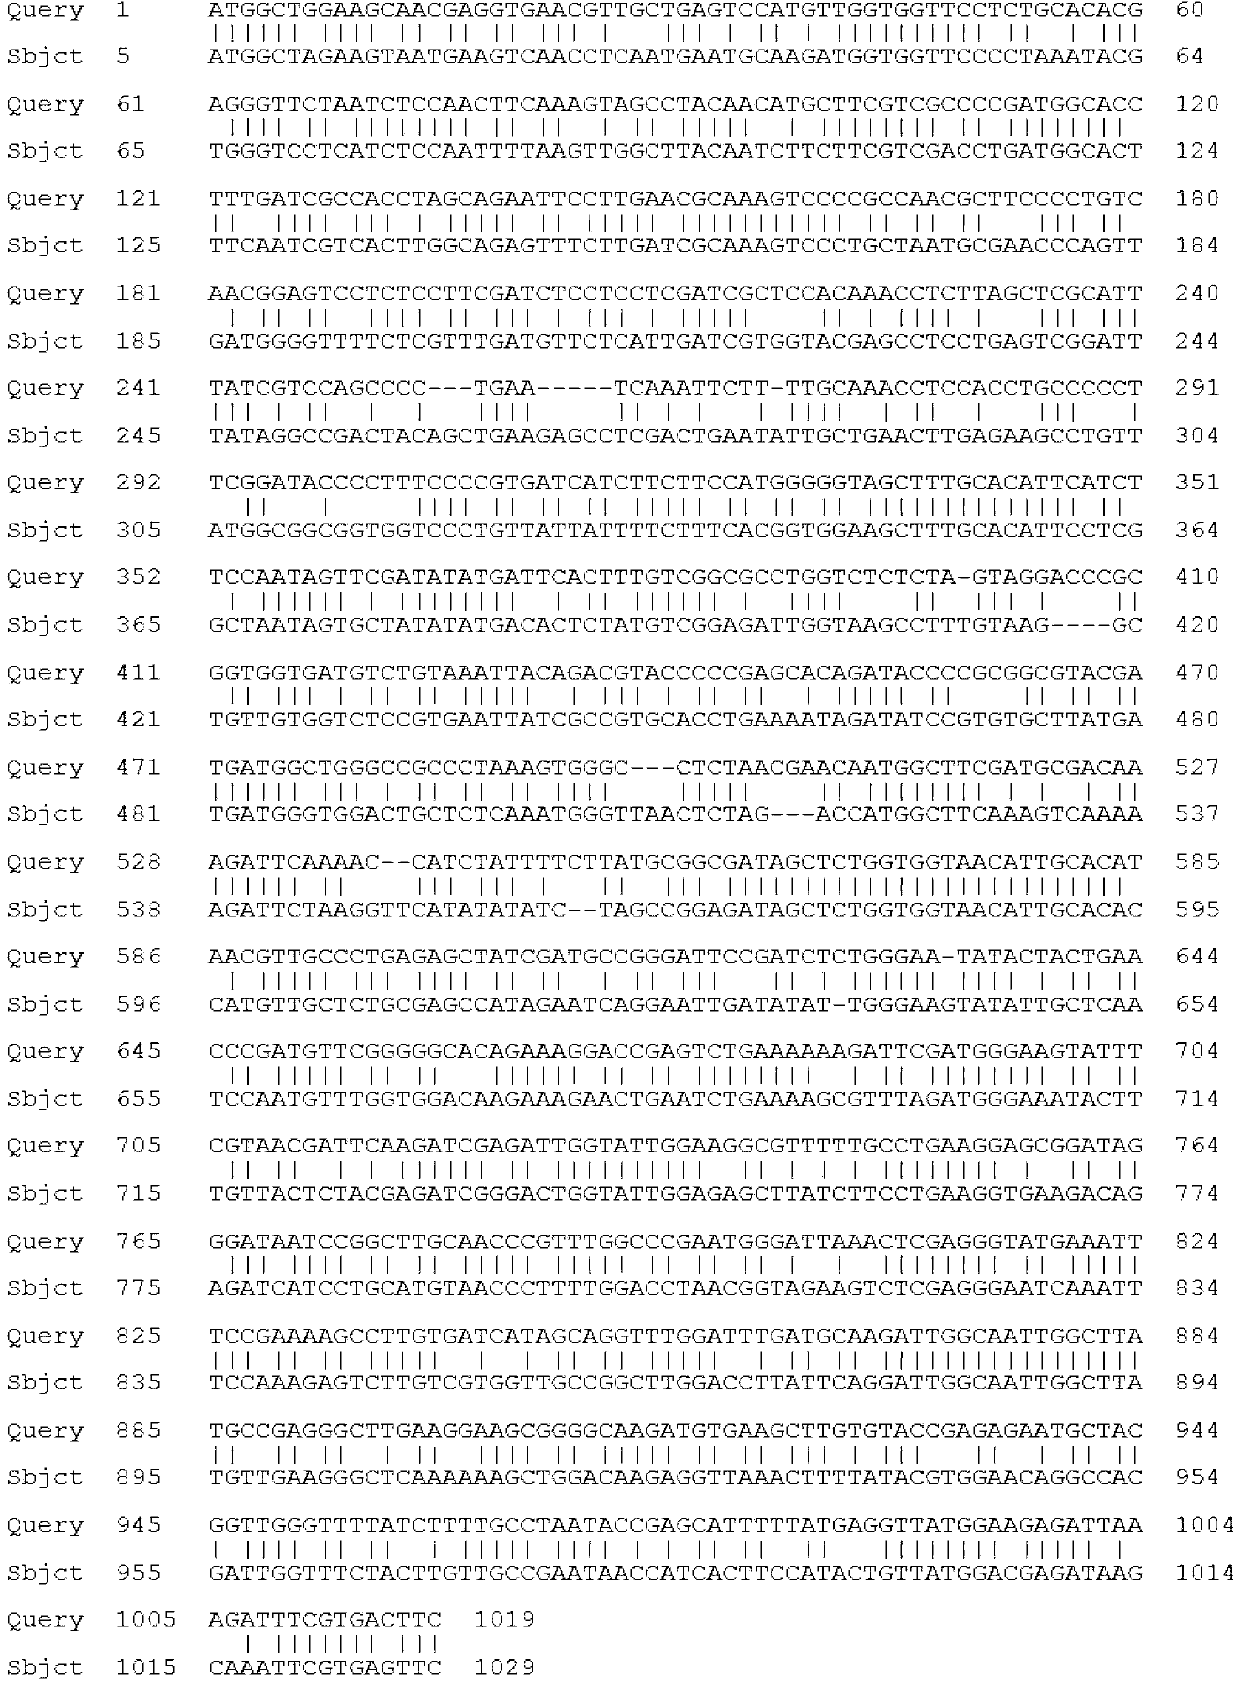 Agapanthus praecox gibberellin receptor APGID1b protein, and encoding gene and probe thereof